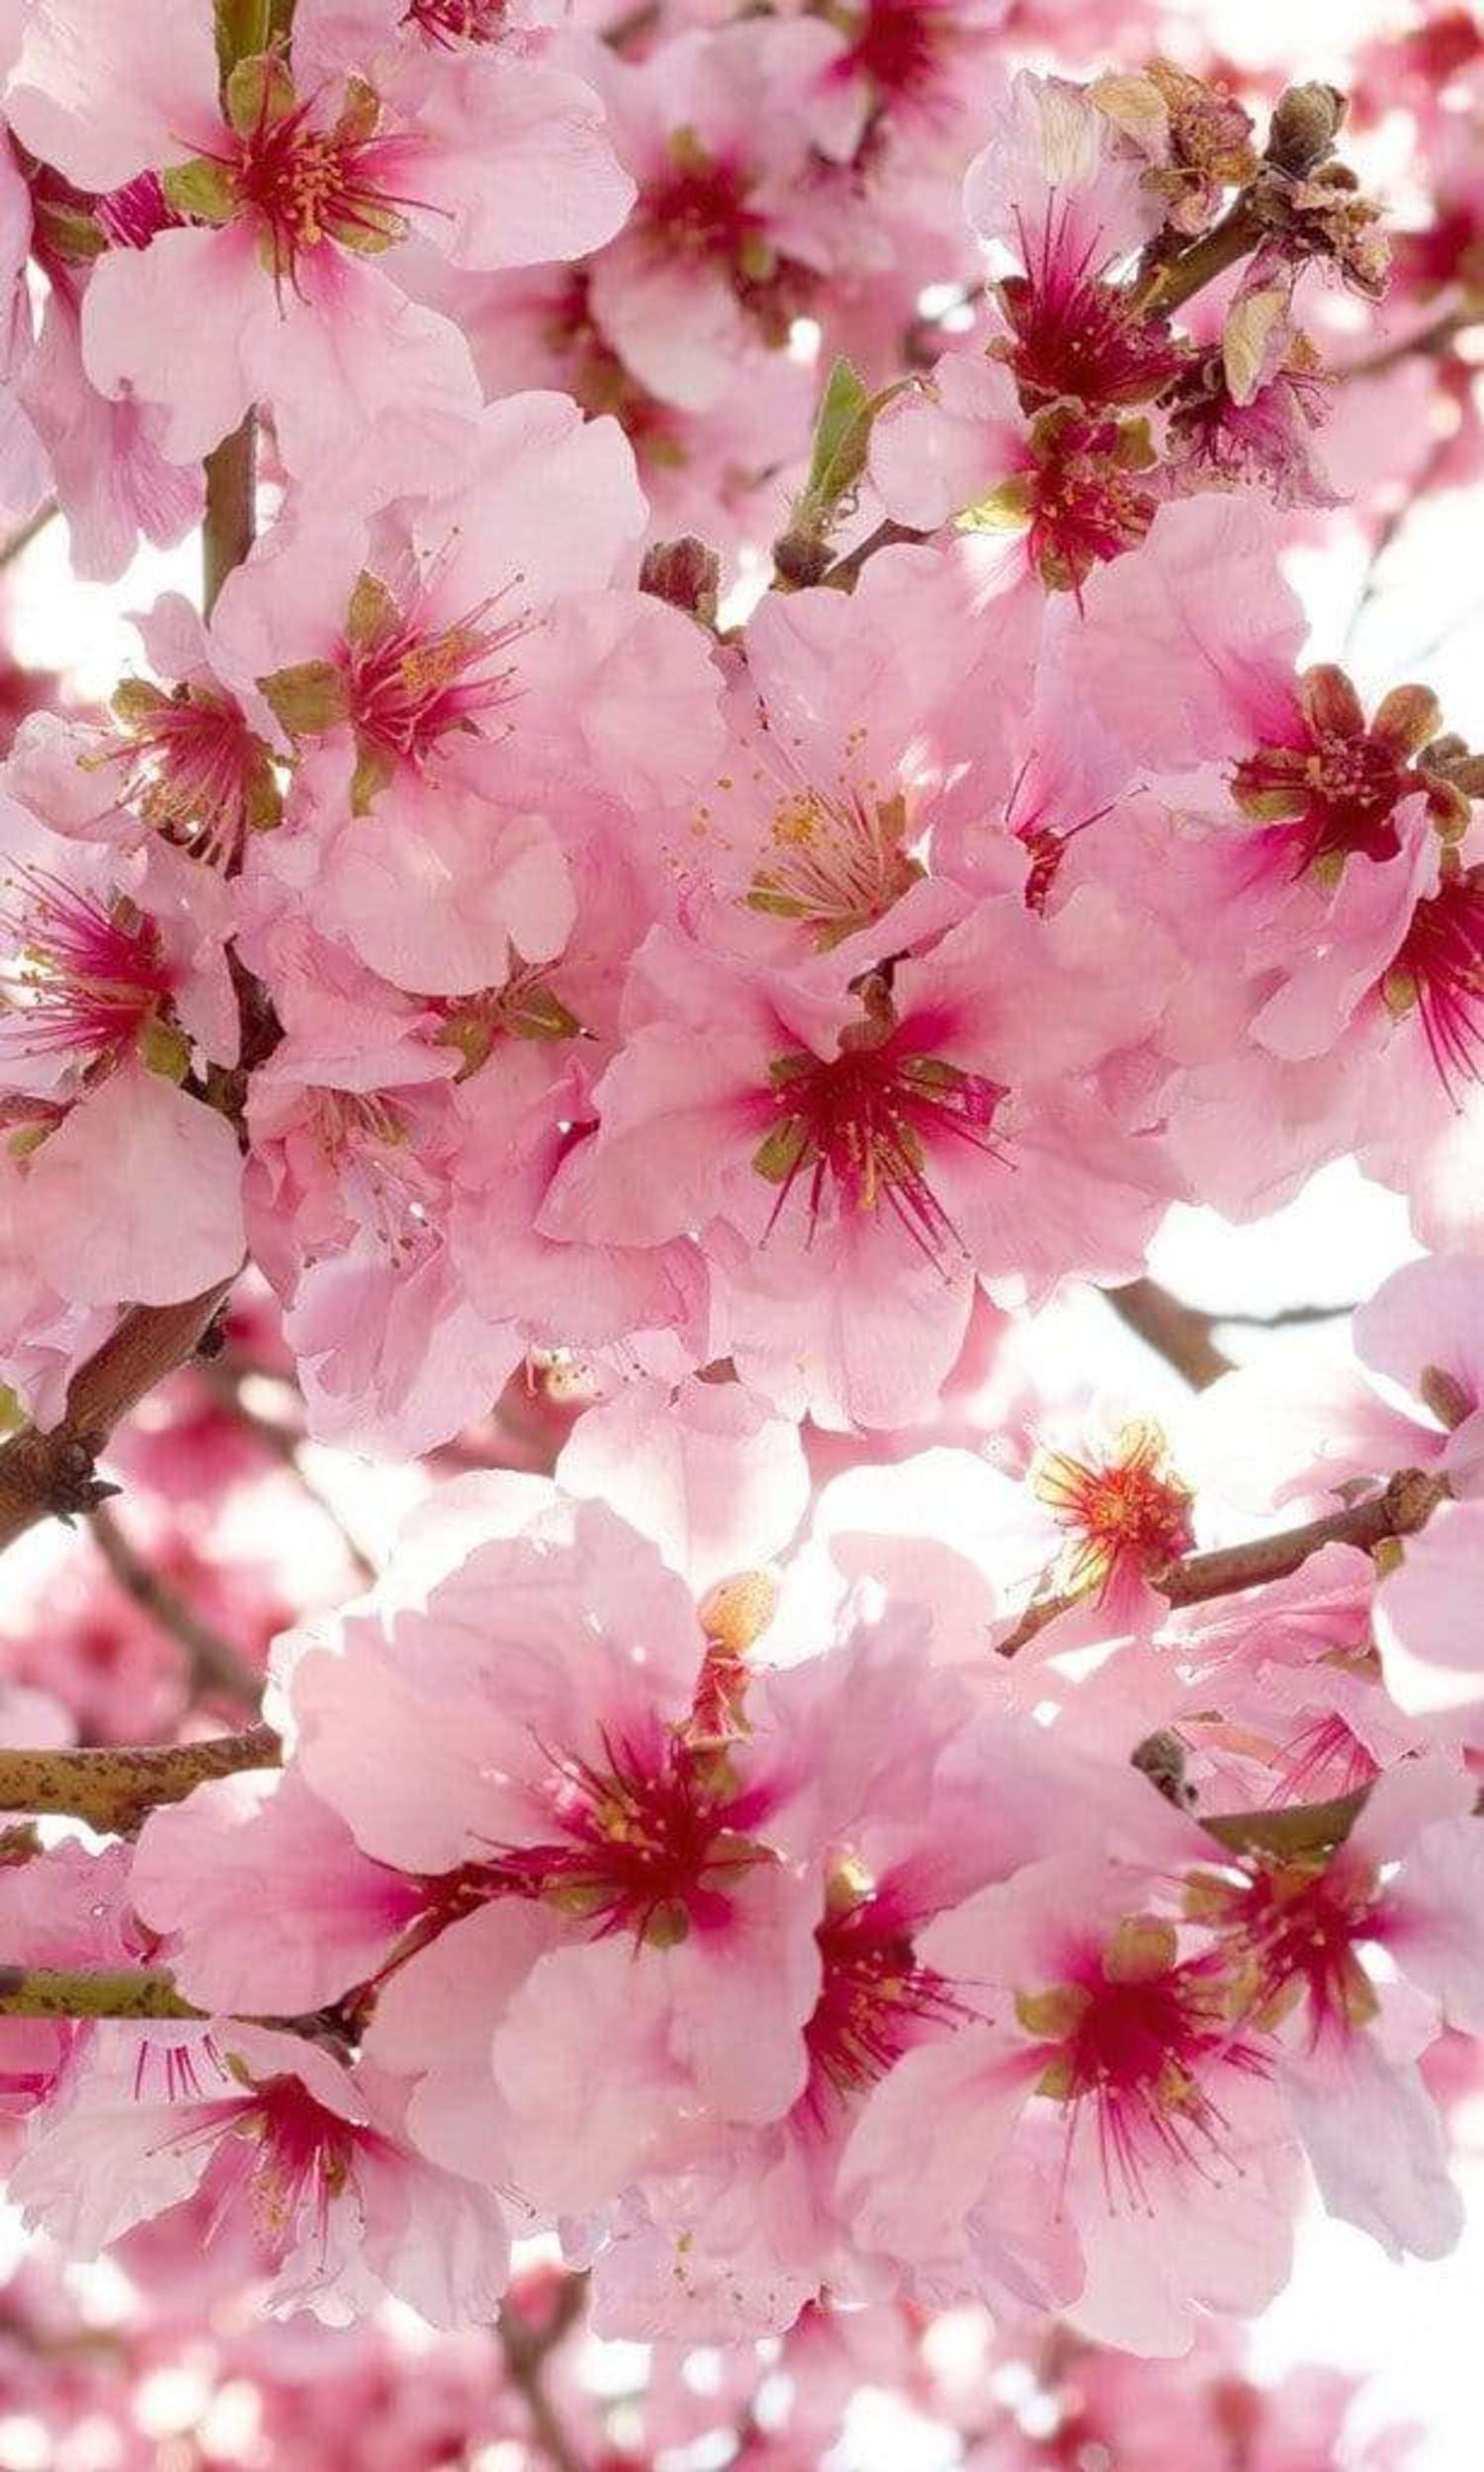 Fotobehang - Apple Blossom 150x250cm - Vliesbehang